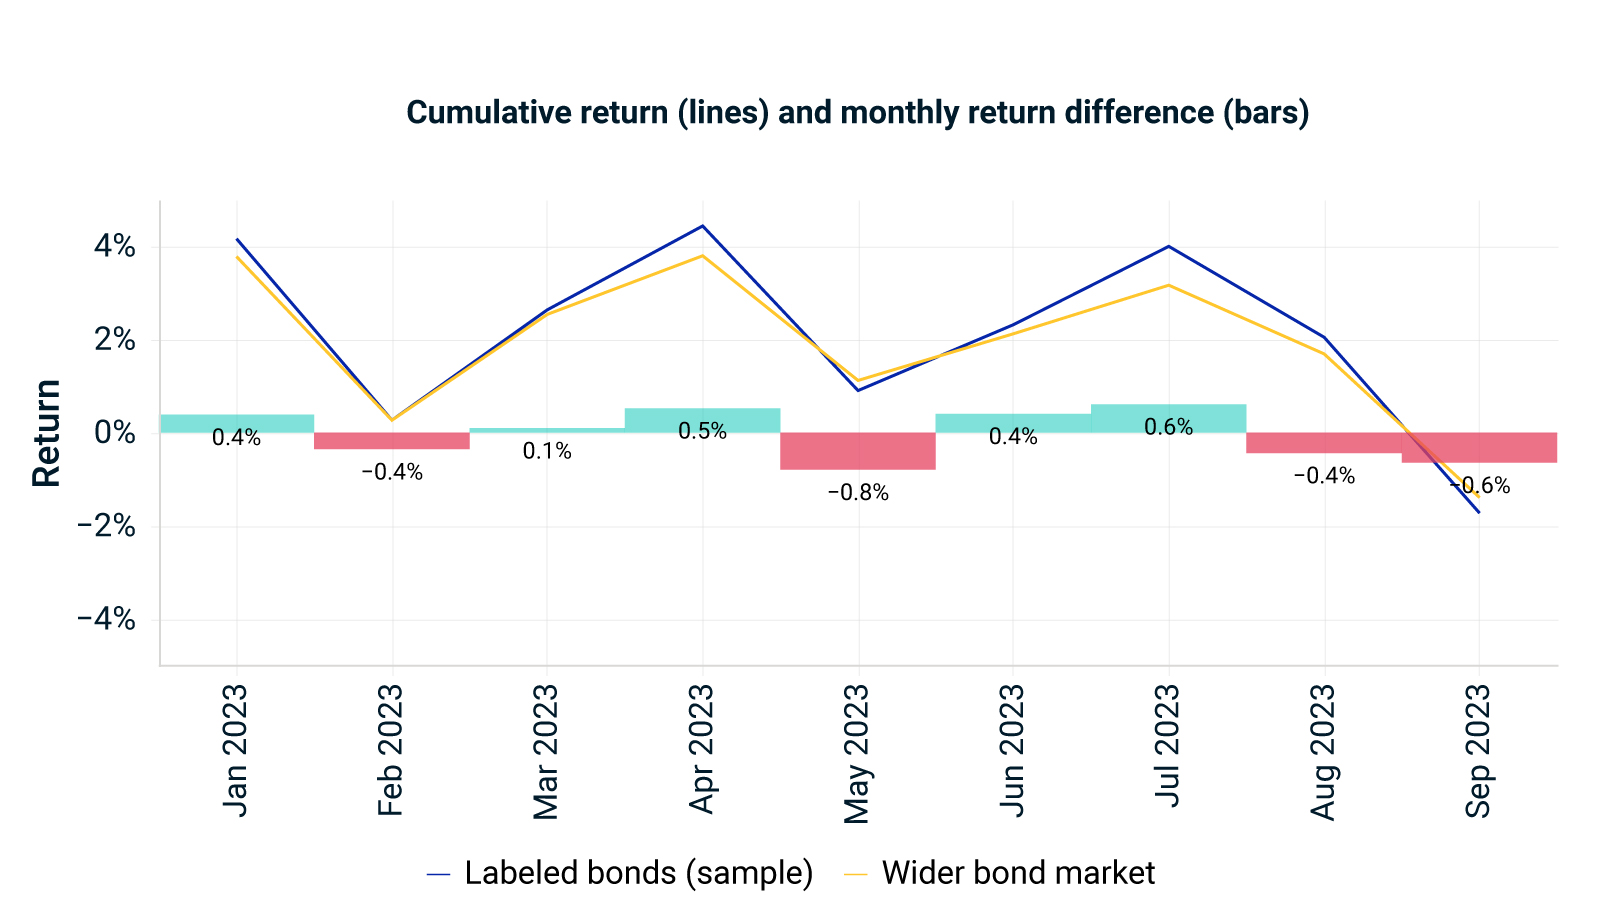 Cumulative return and monthly return difference (labeled bonds vs. wider bond market)